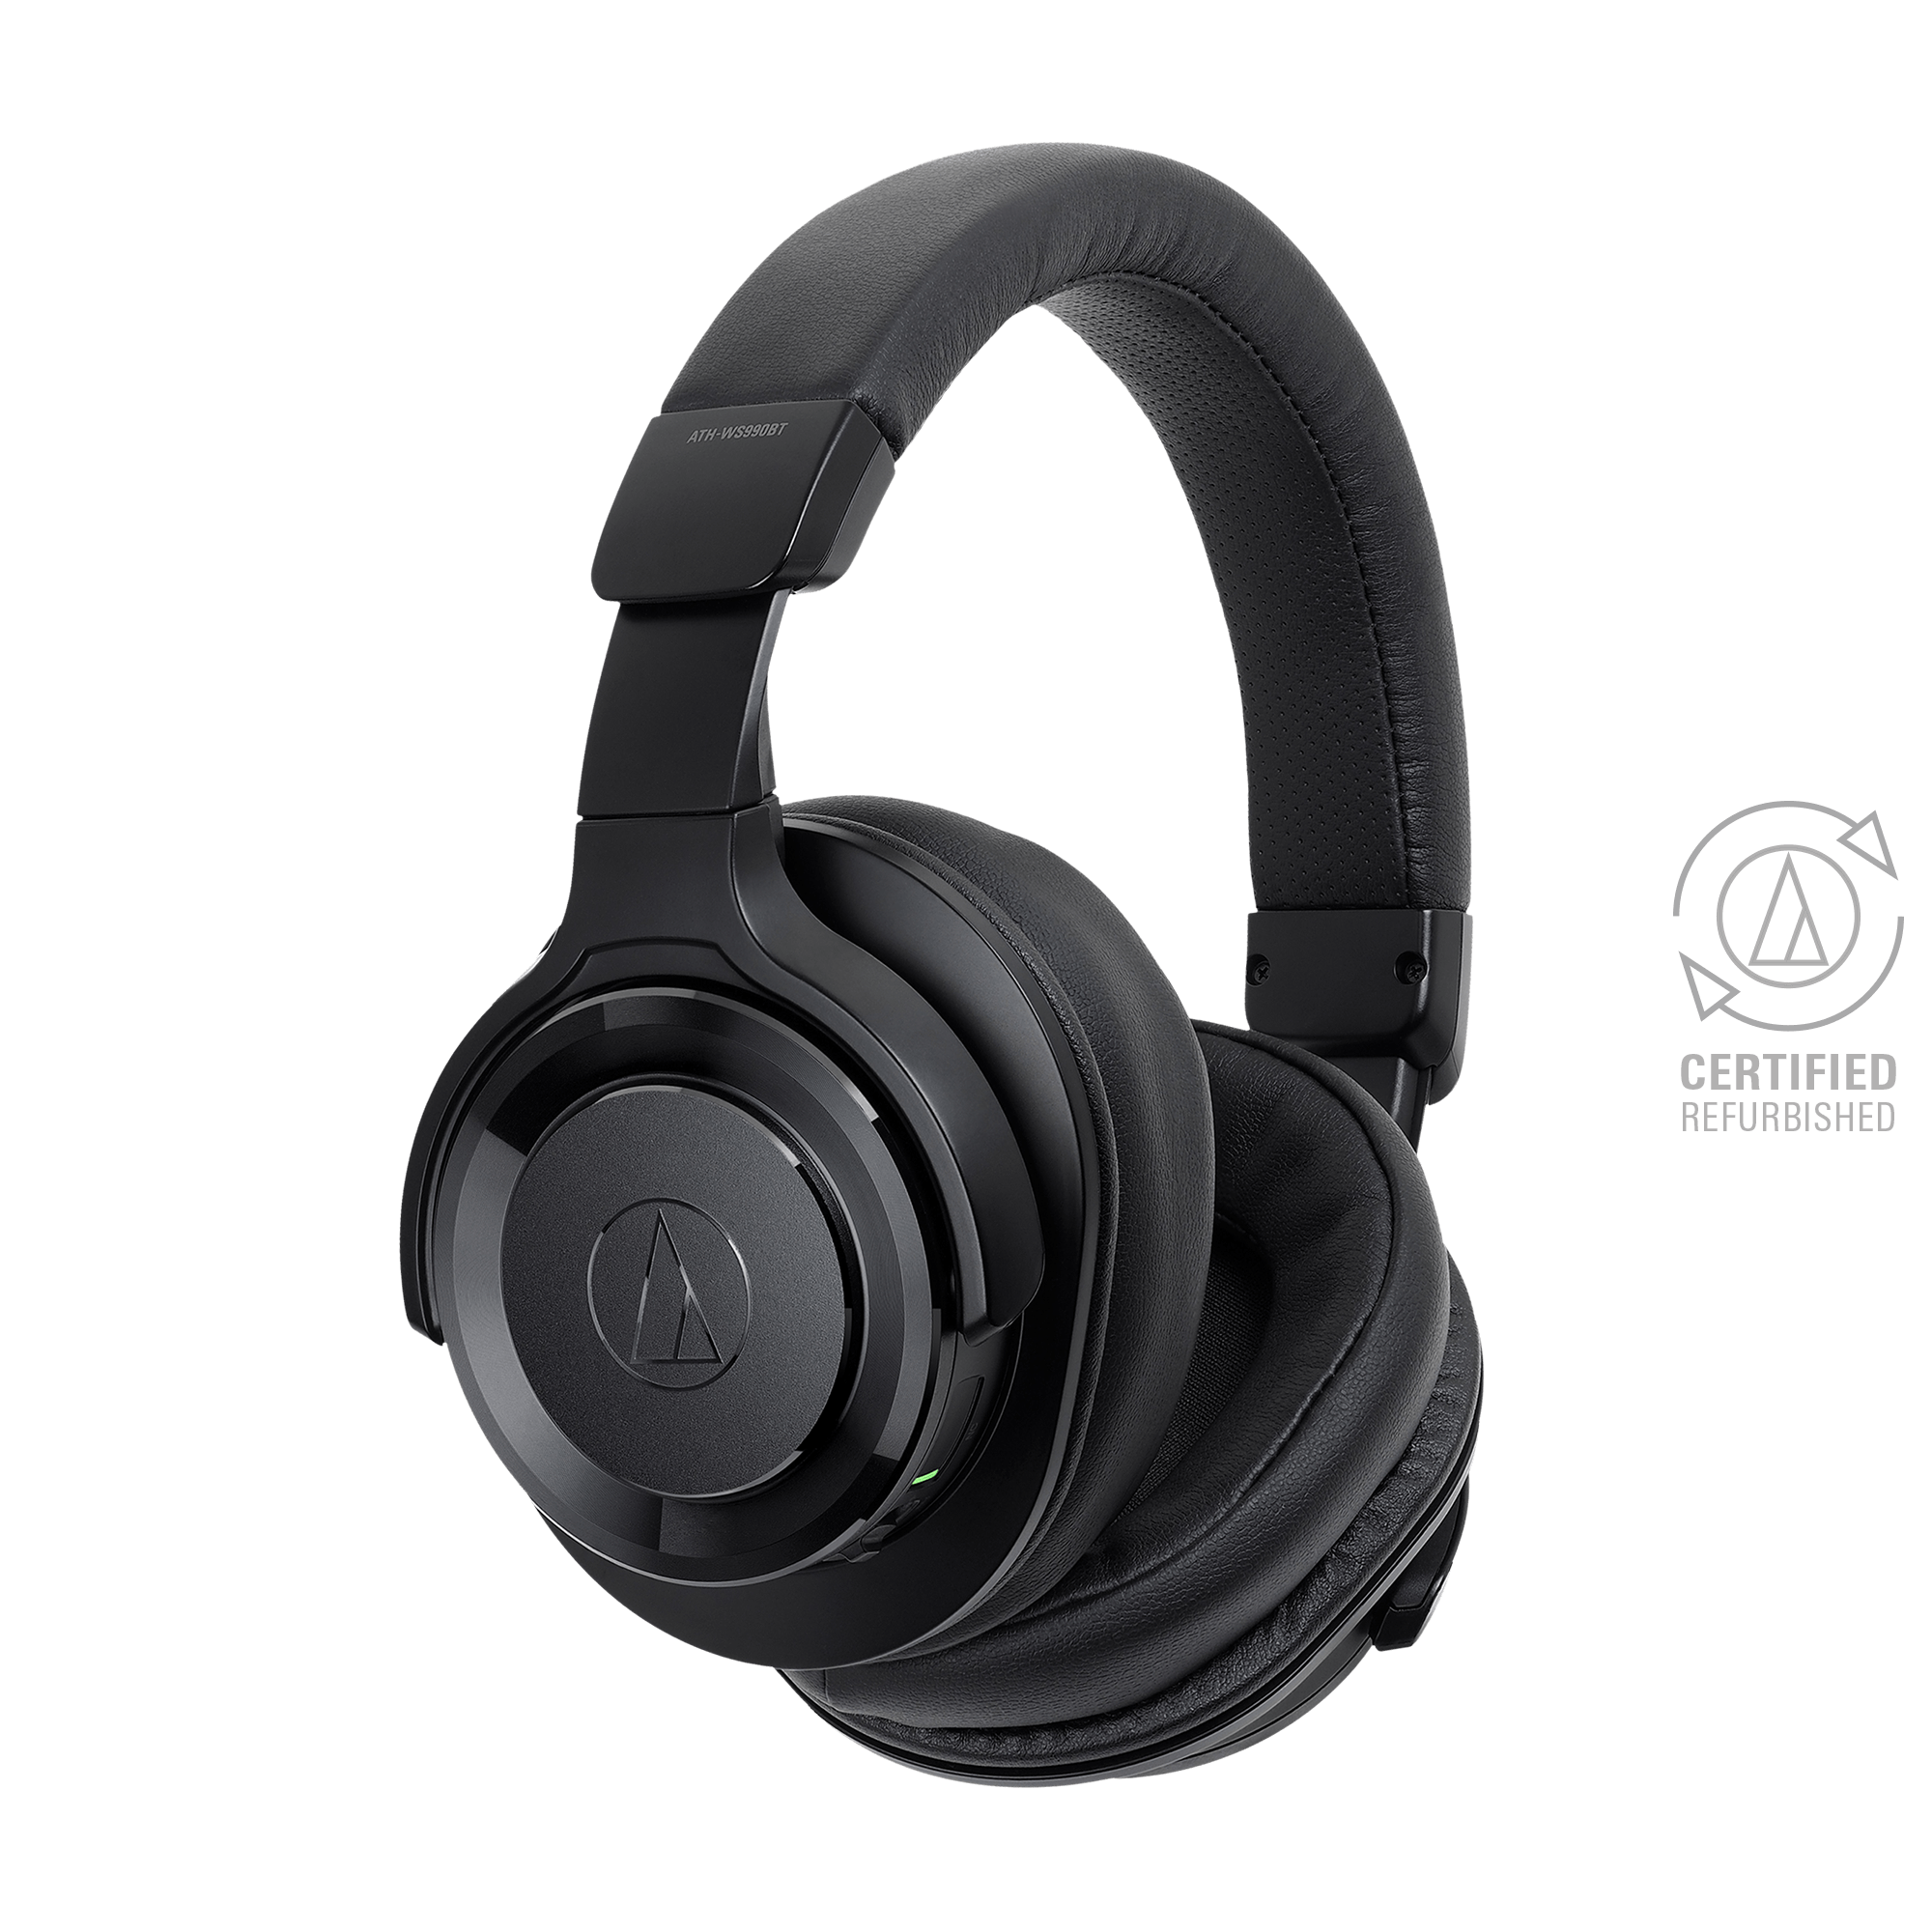 Wireless Over-Ear Headphones | ATH-WS990BTBK-CR Certified